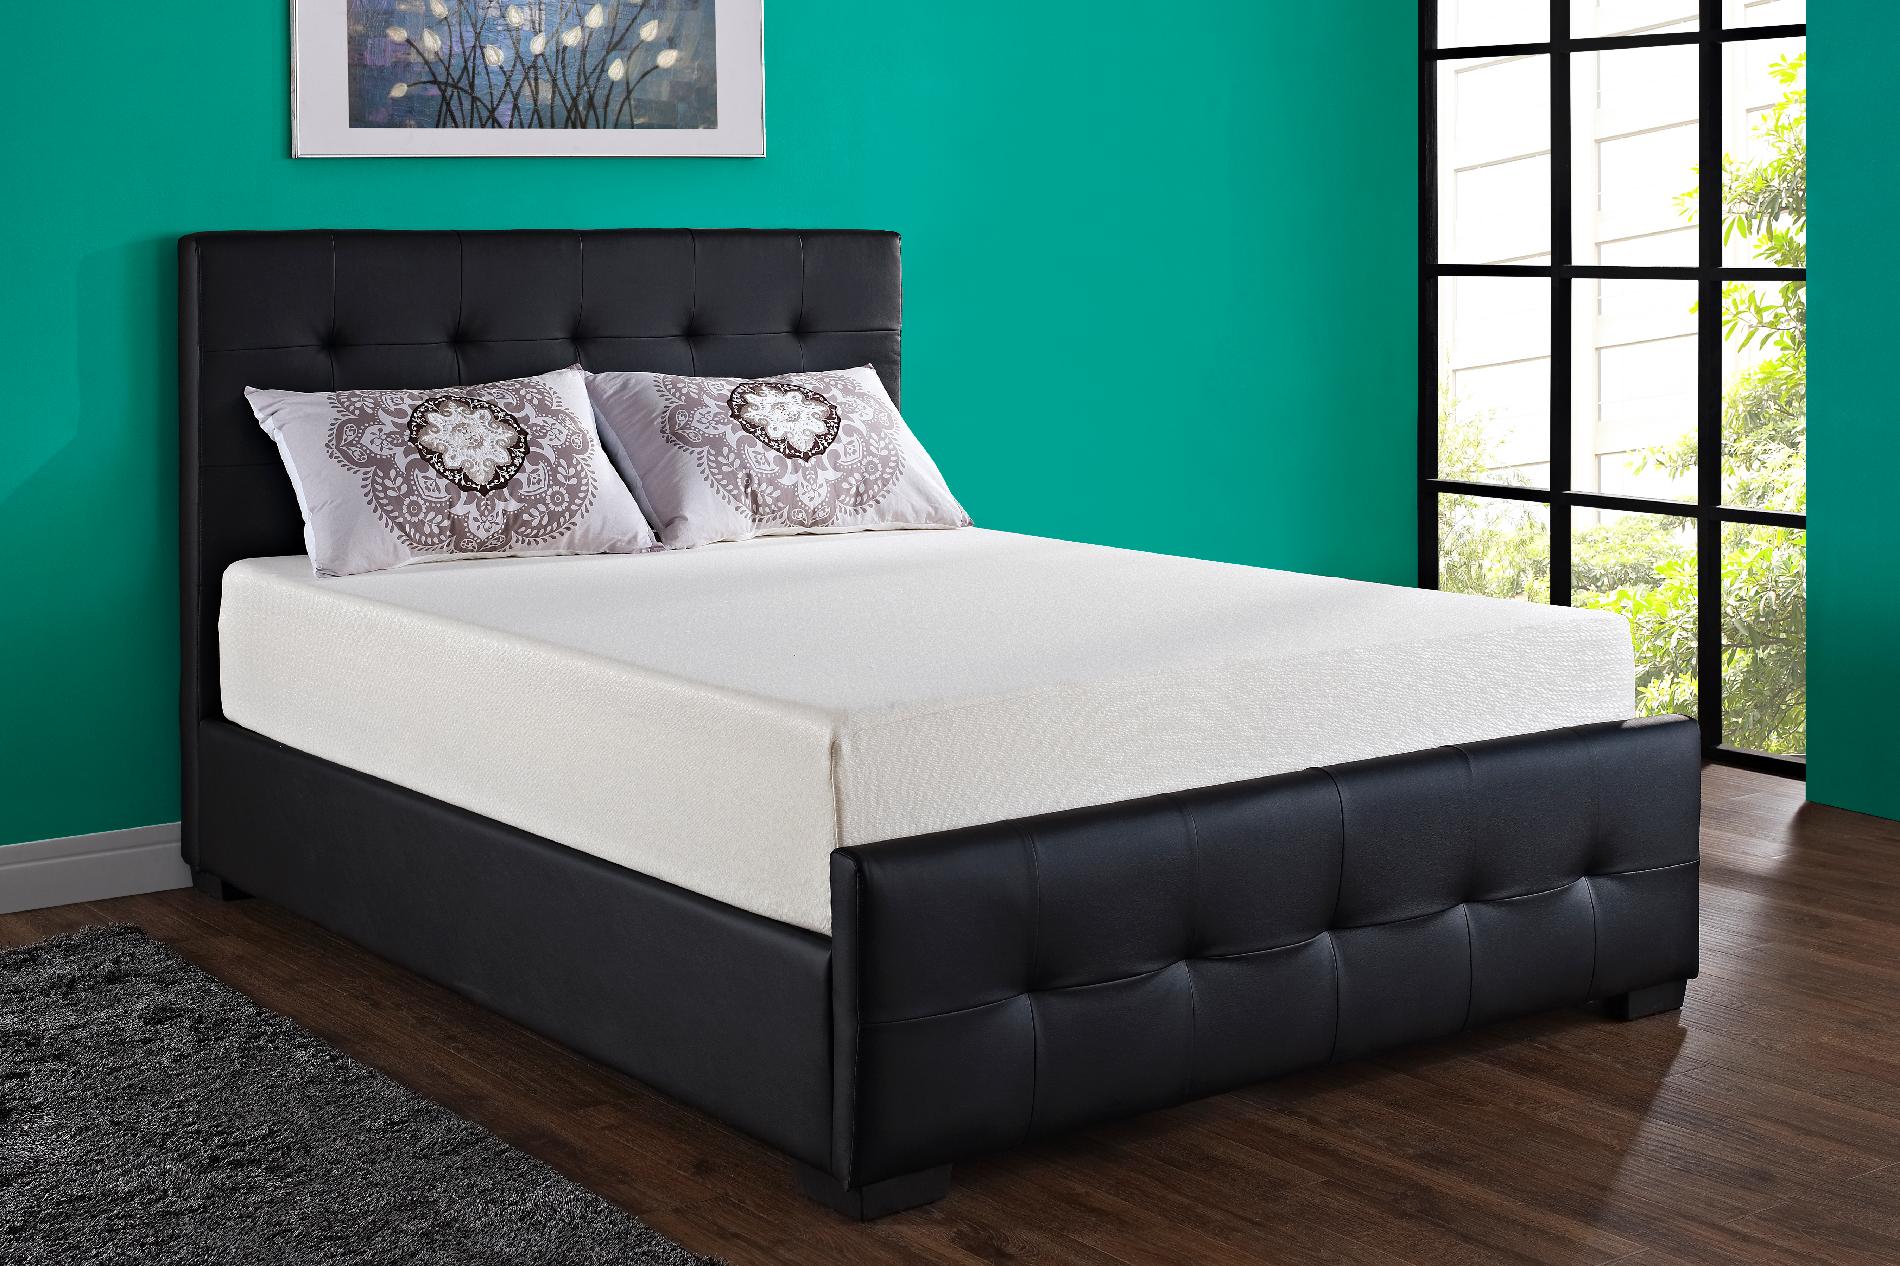 Reveal 53+ Striking 12' memory foam mattress With Many New Styles